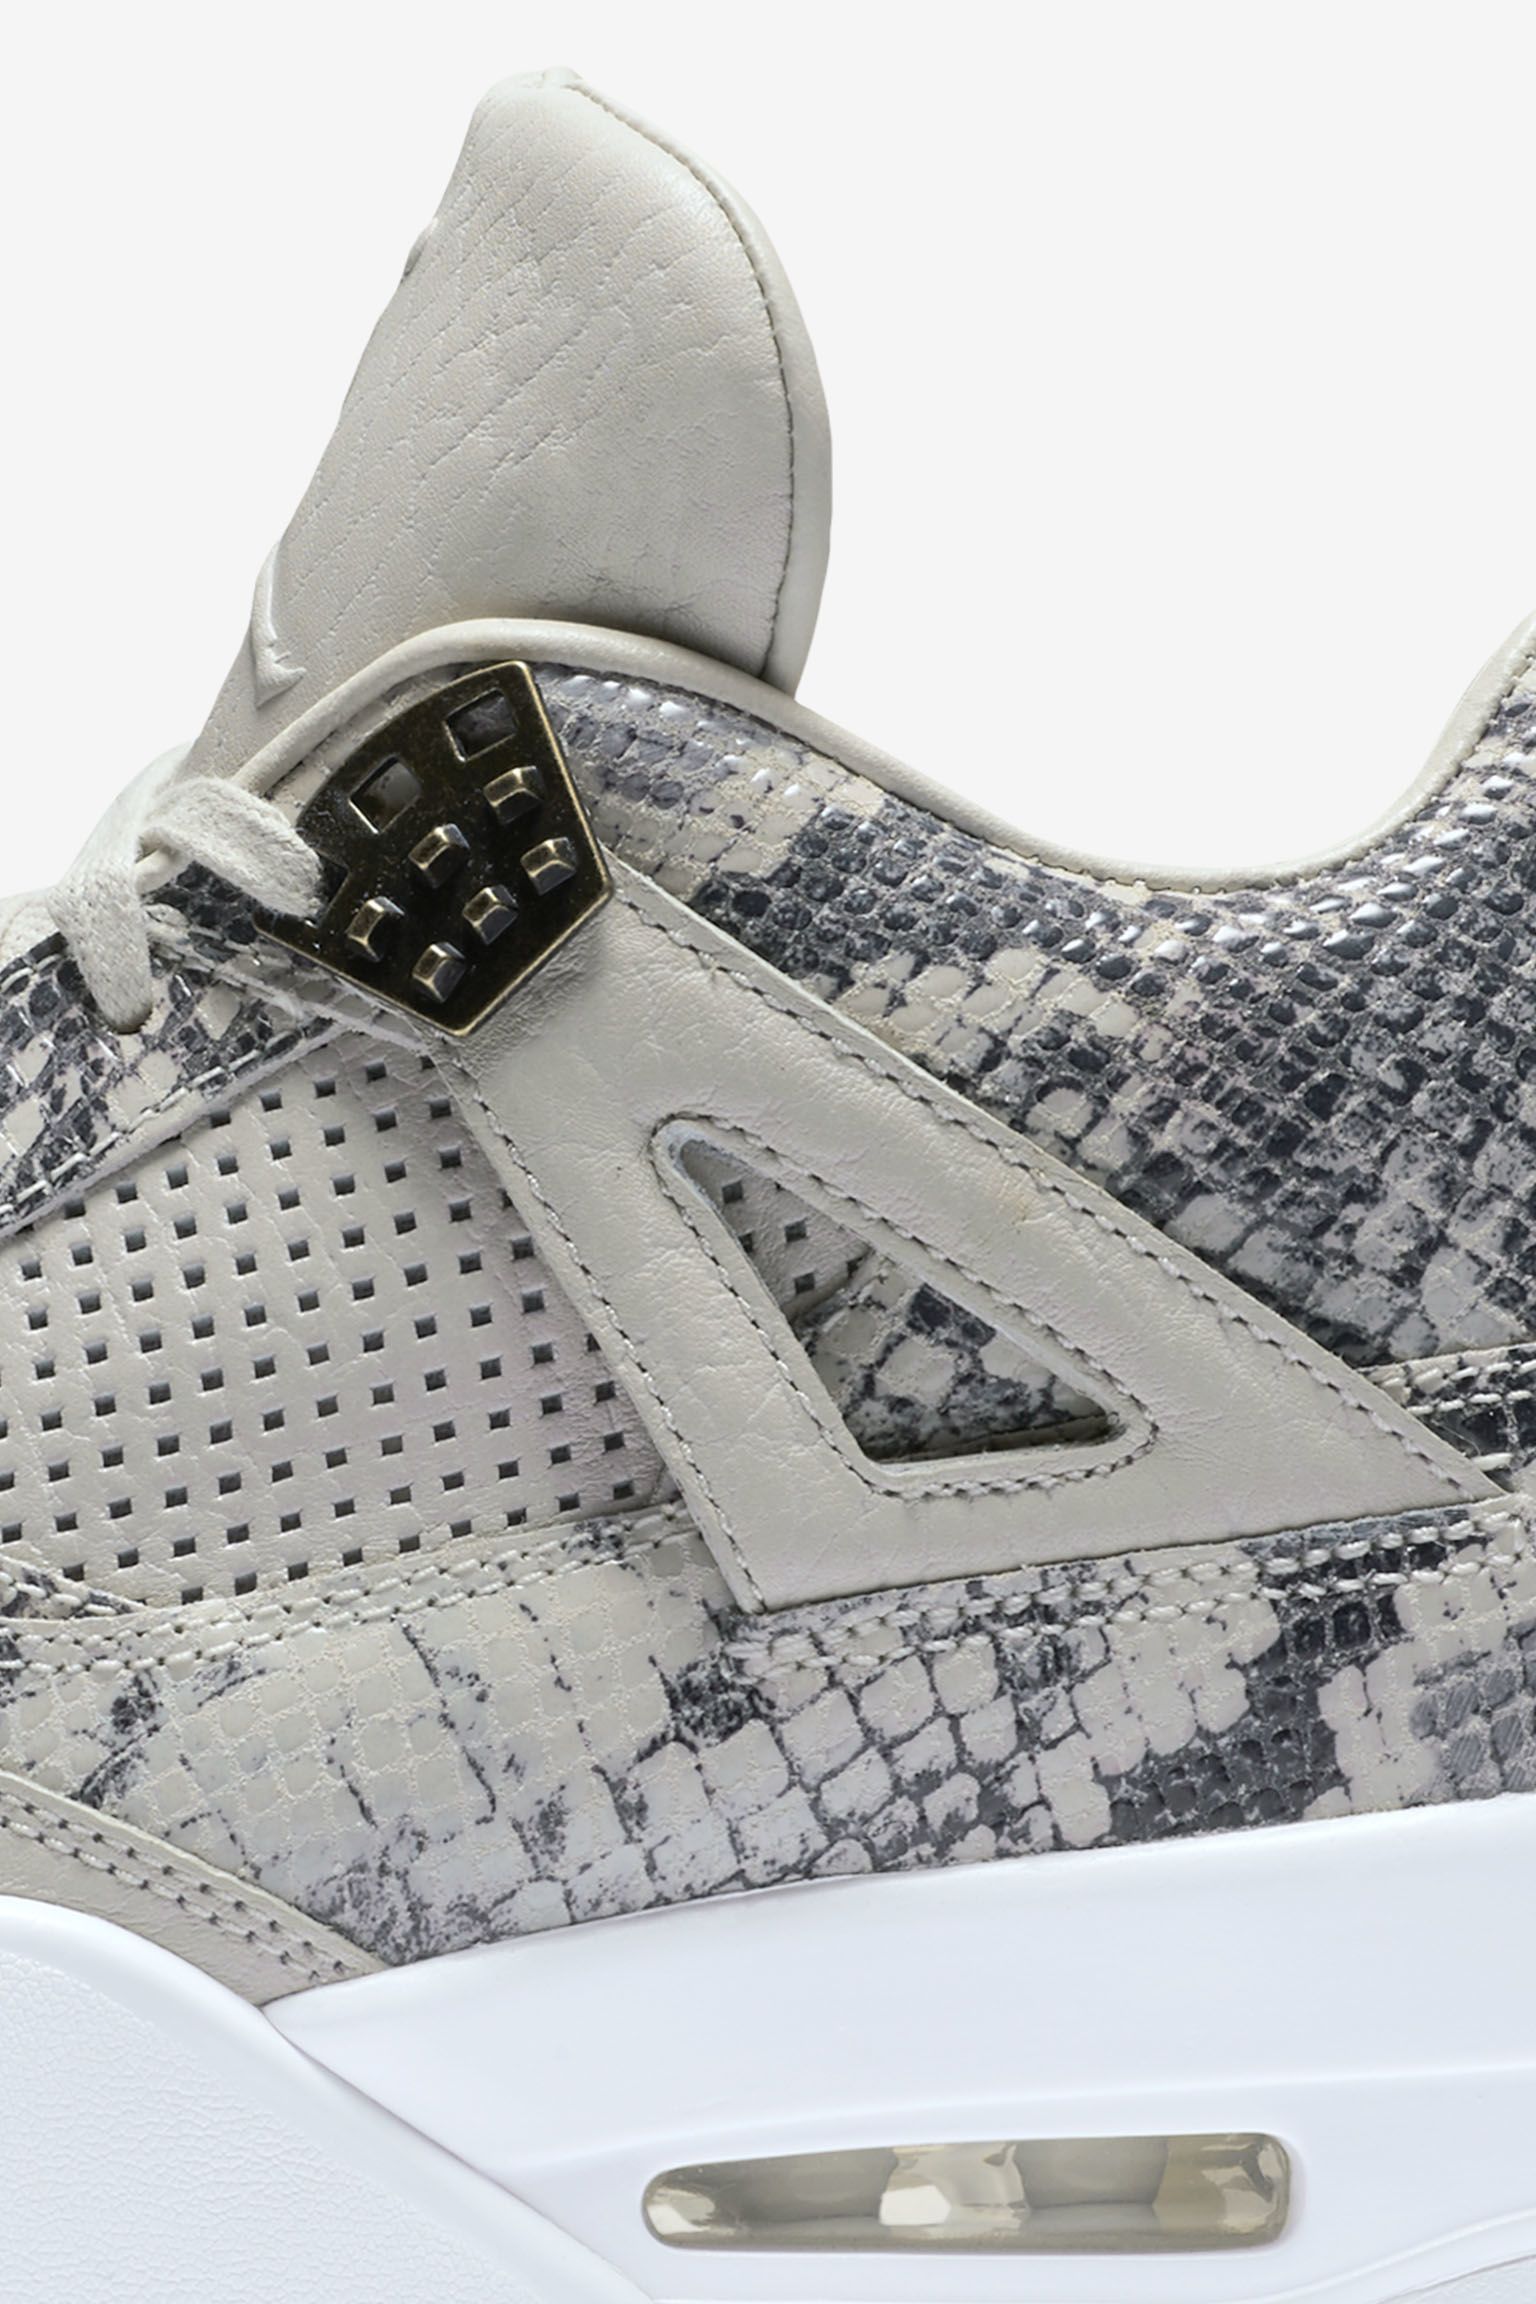 Air Jordan 4 Retro 'Snakeskin' Release Date. Nike SNKRS